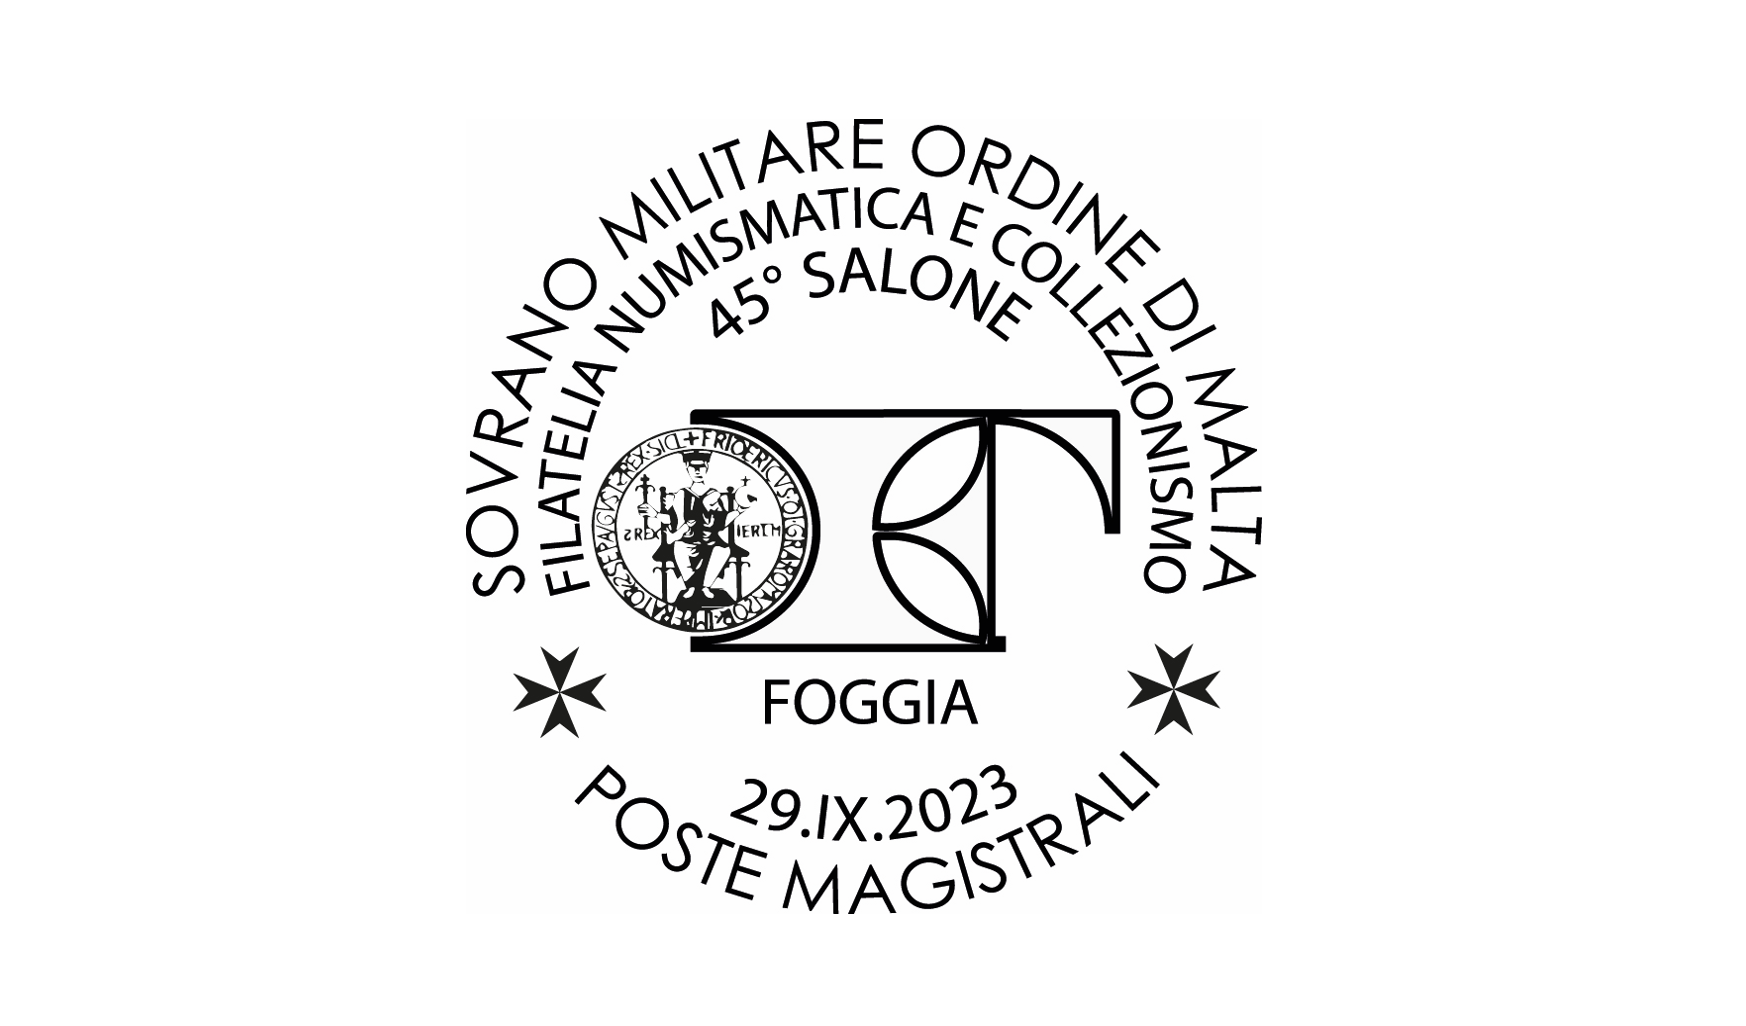 Poste Magistrali in Foggia for the 45th Philately Exhibition